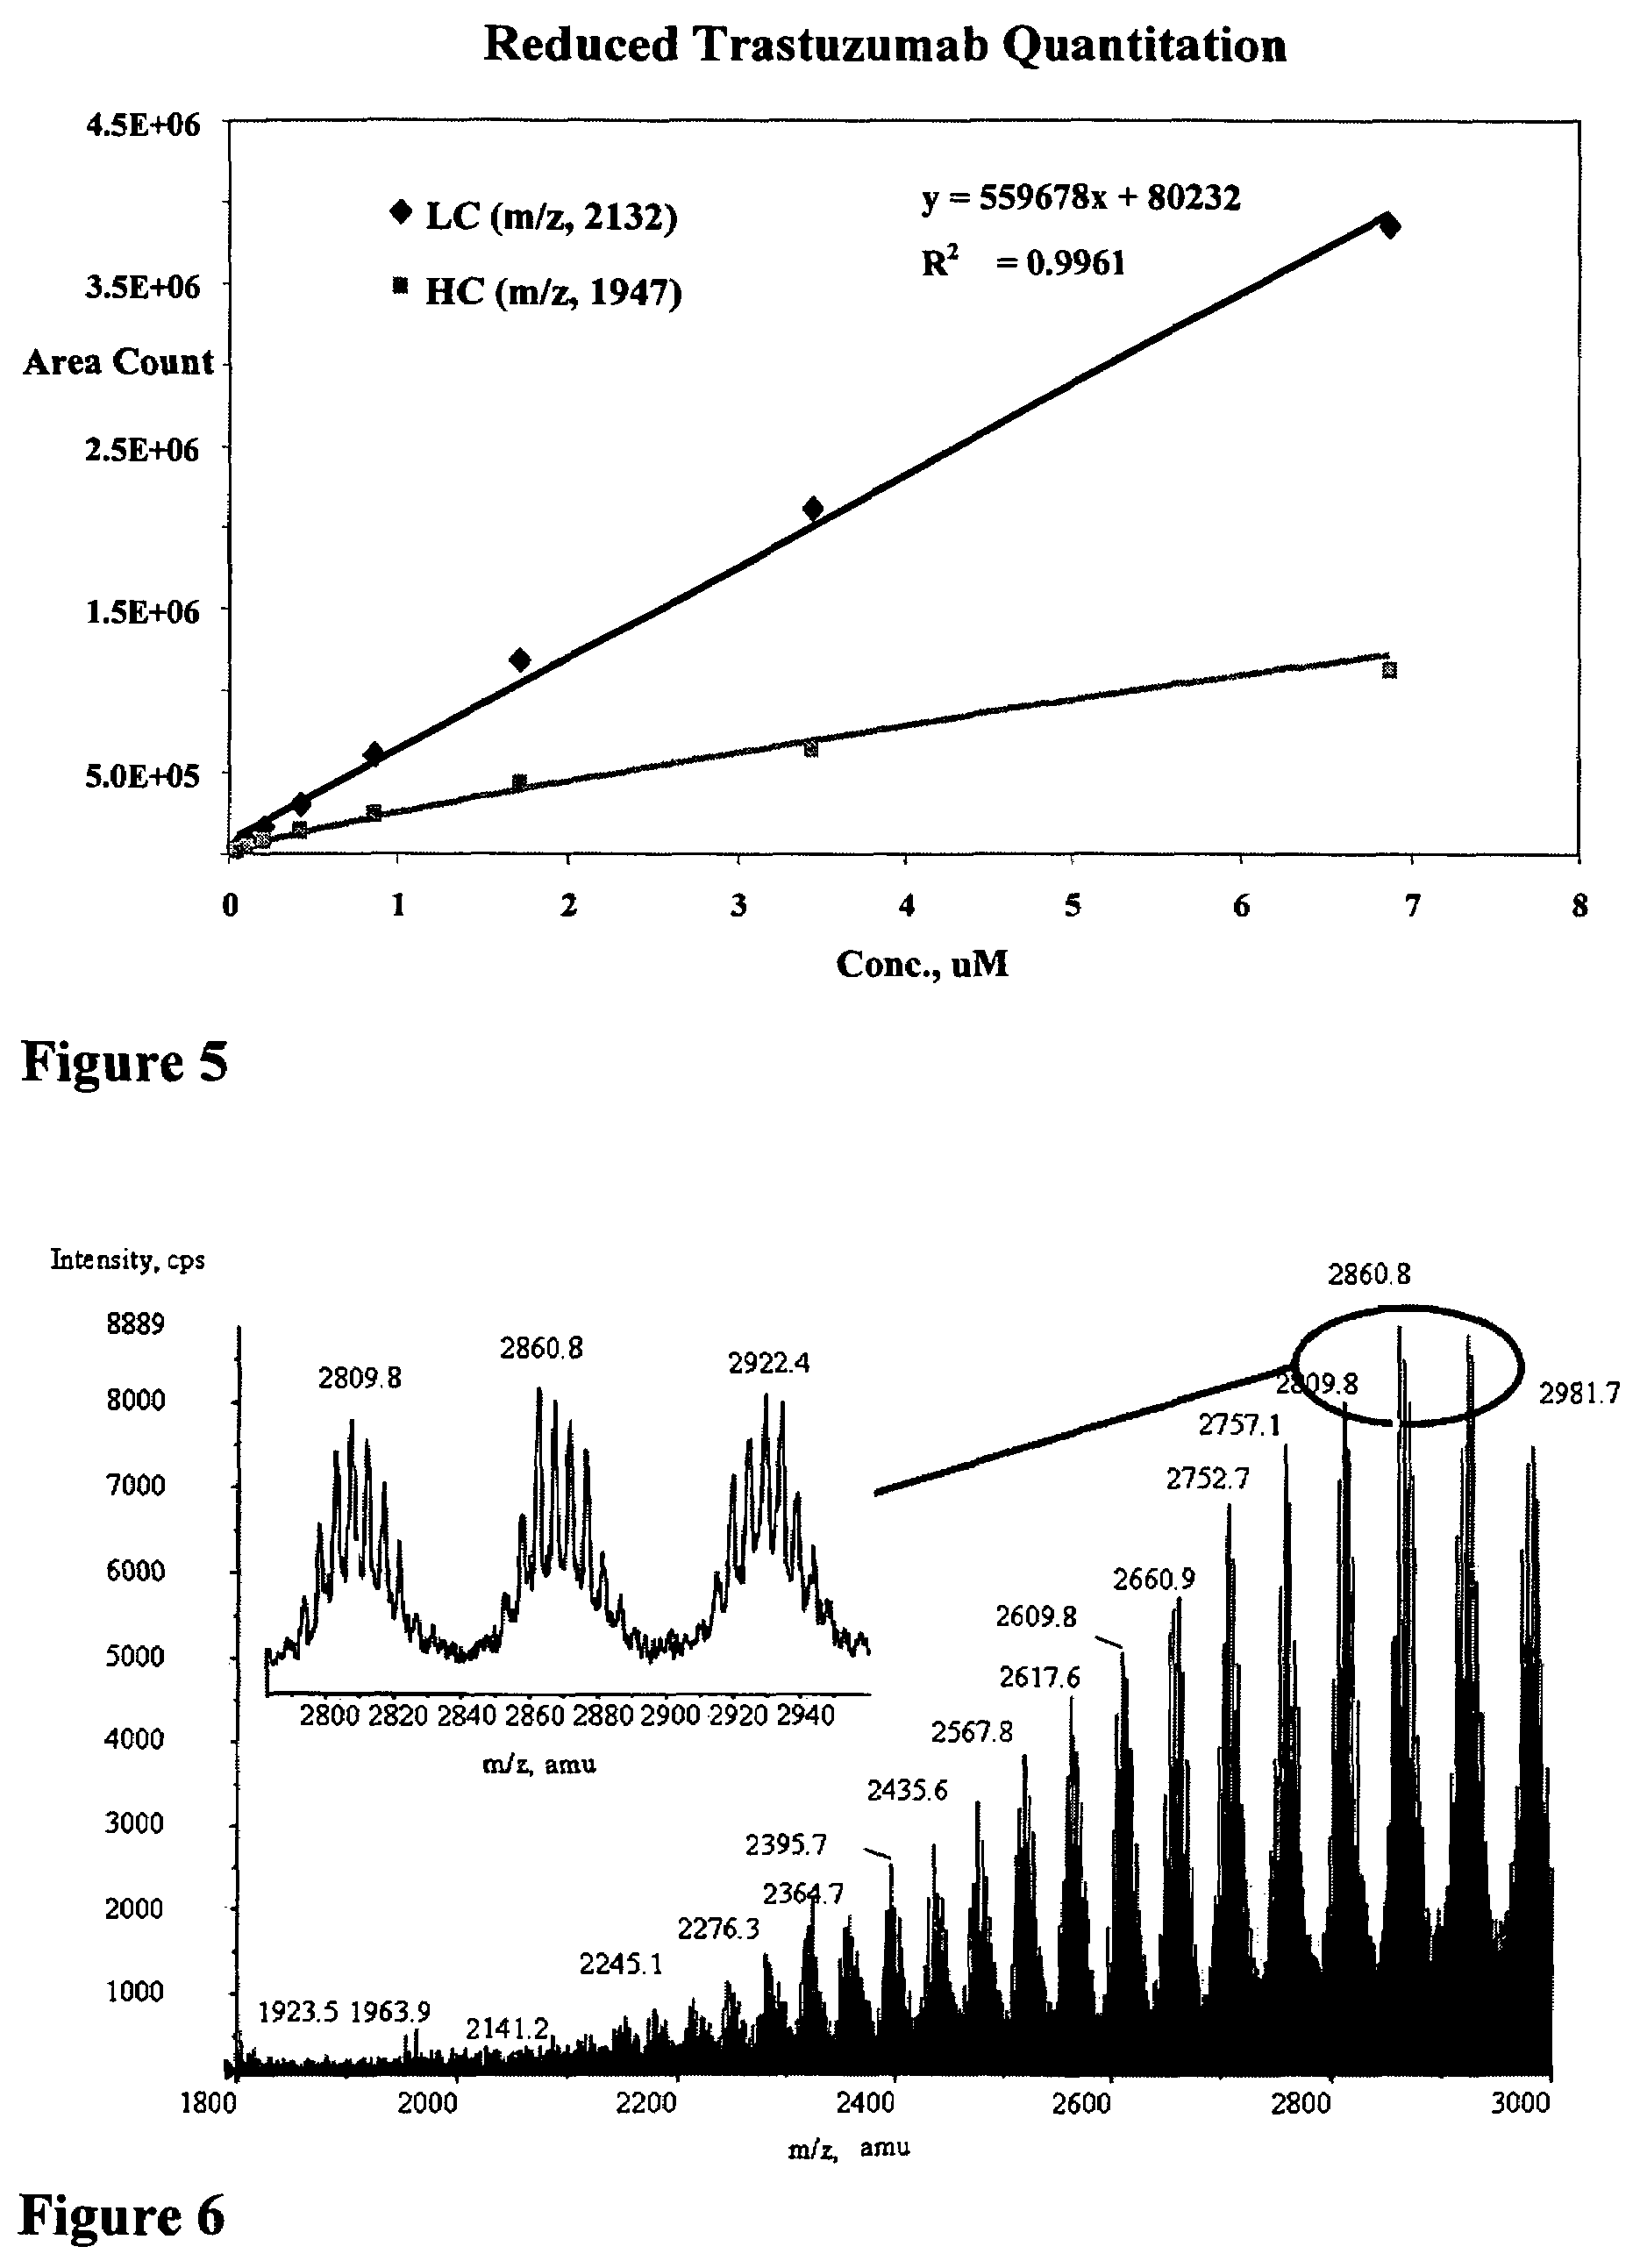 Mass spectrometry of antibody conjugates